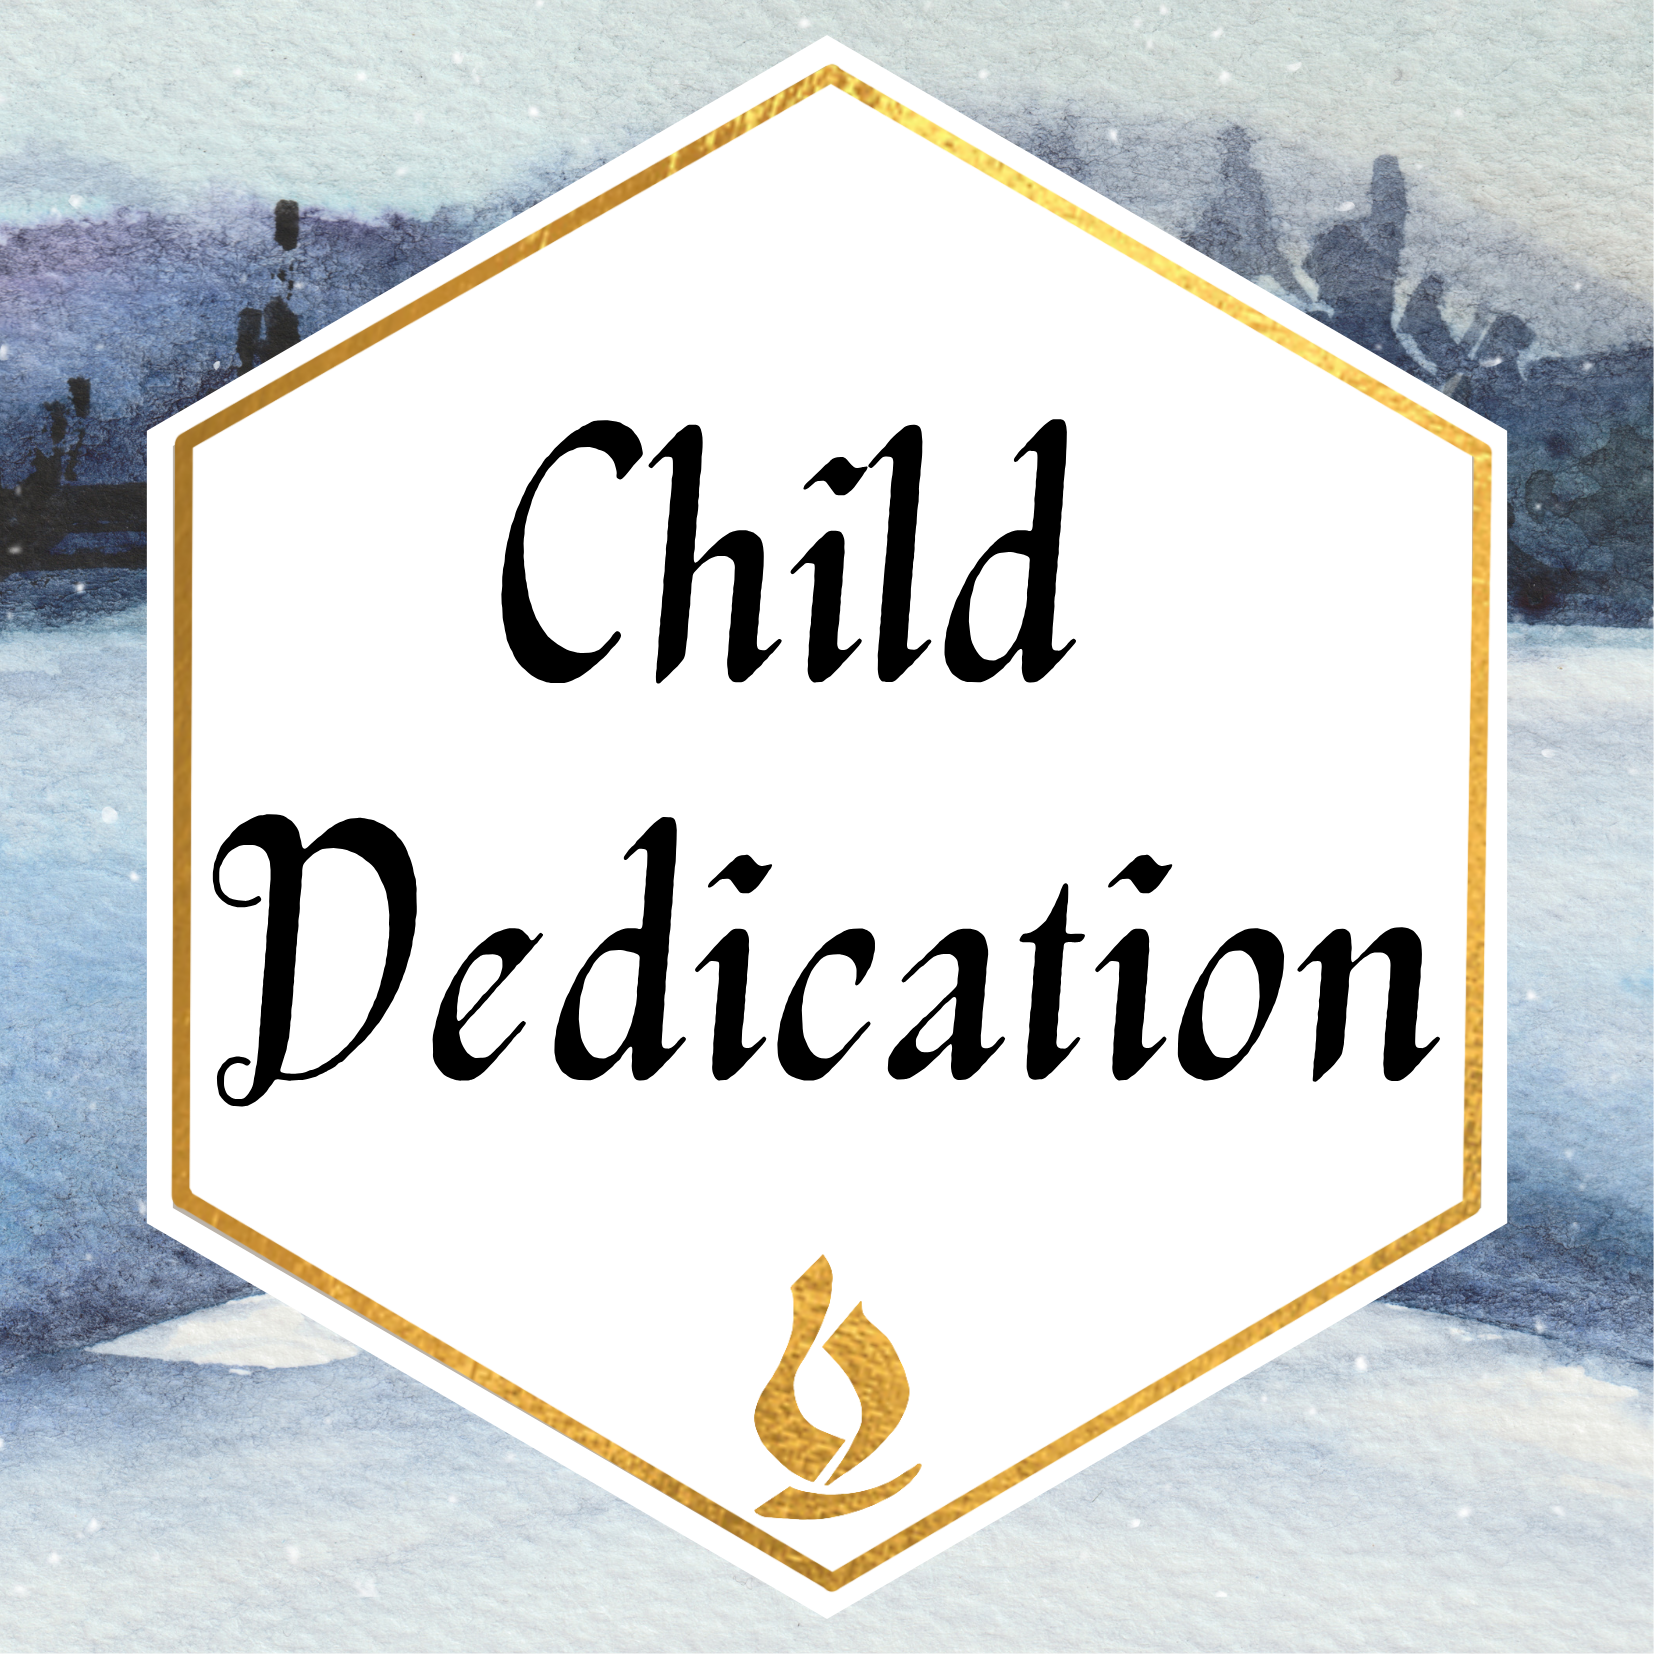 Child Dedication  12/24